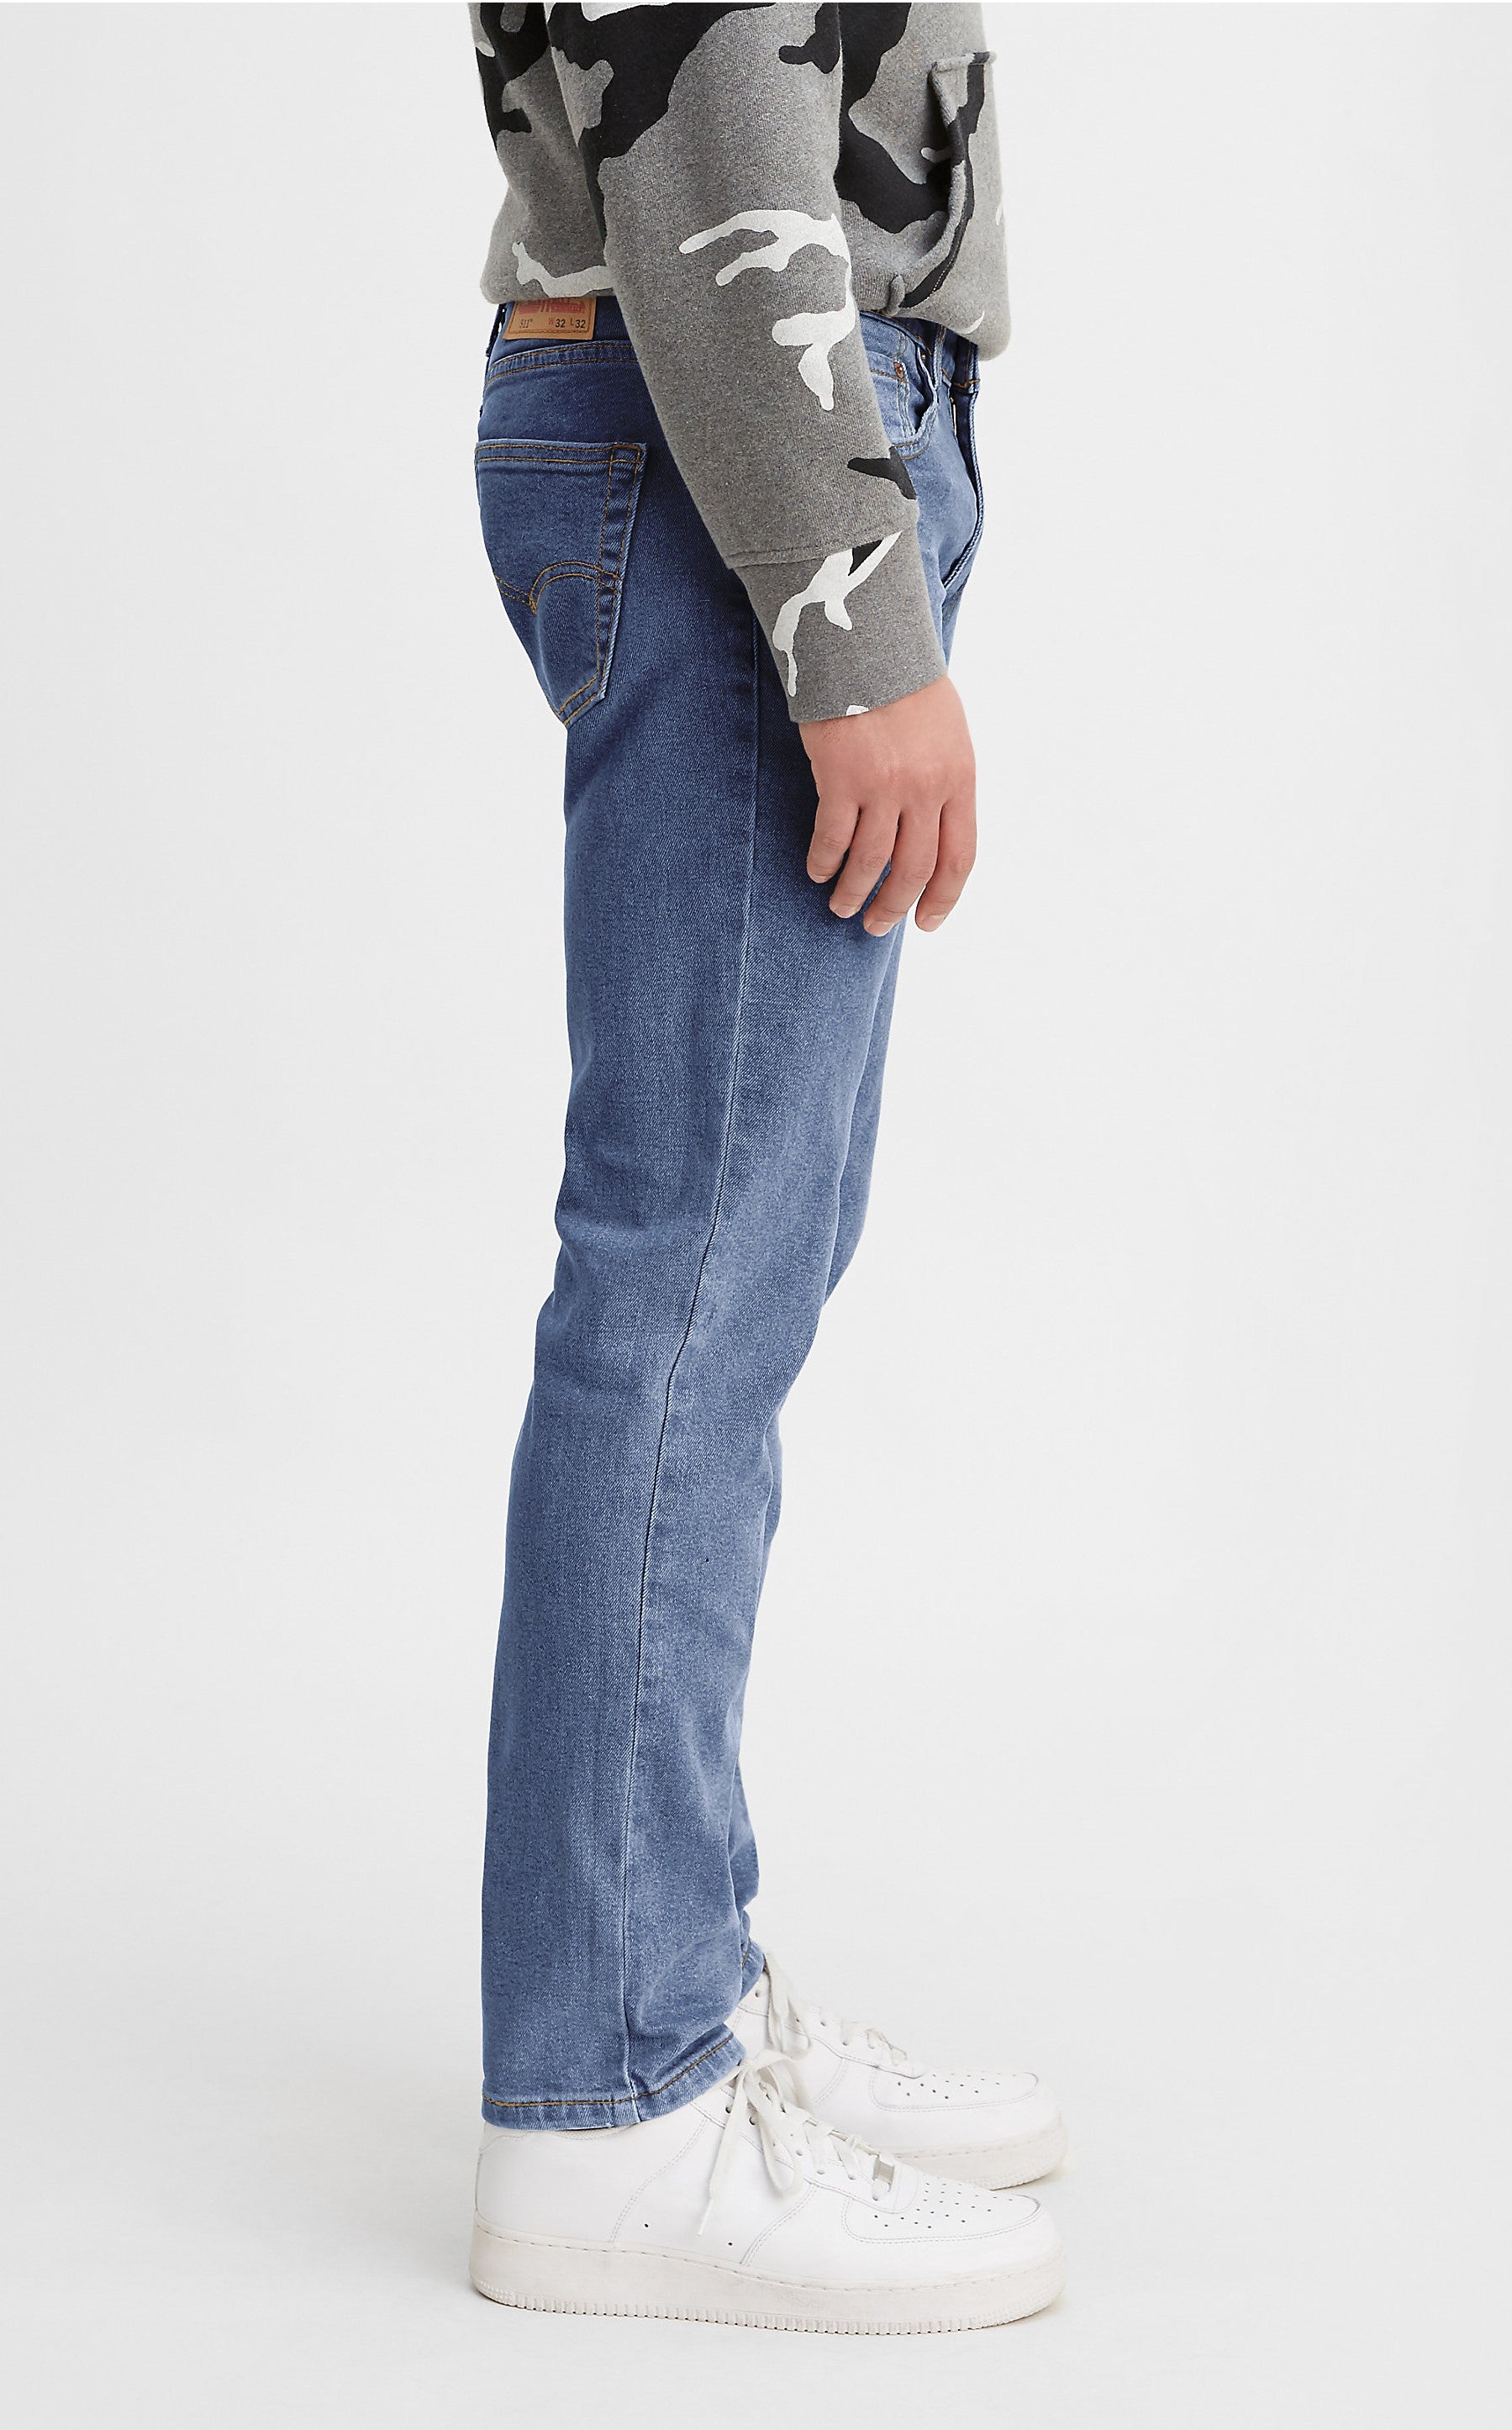 pantalones-jeans-levis-511-slim-kota-p-caballeros